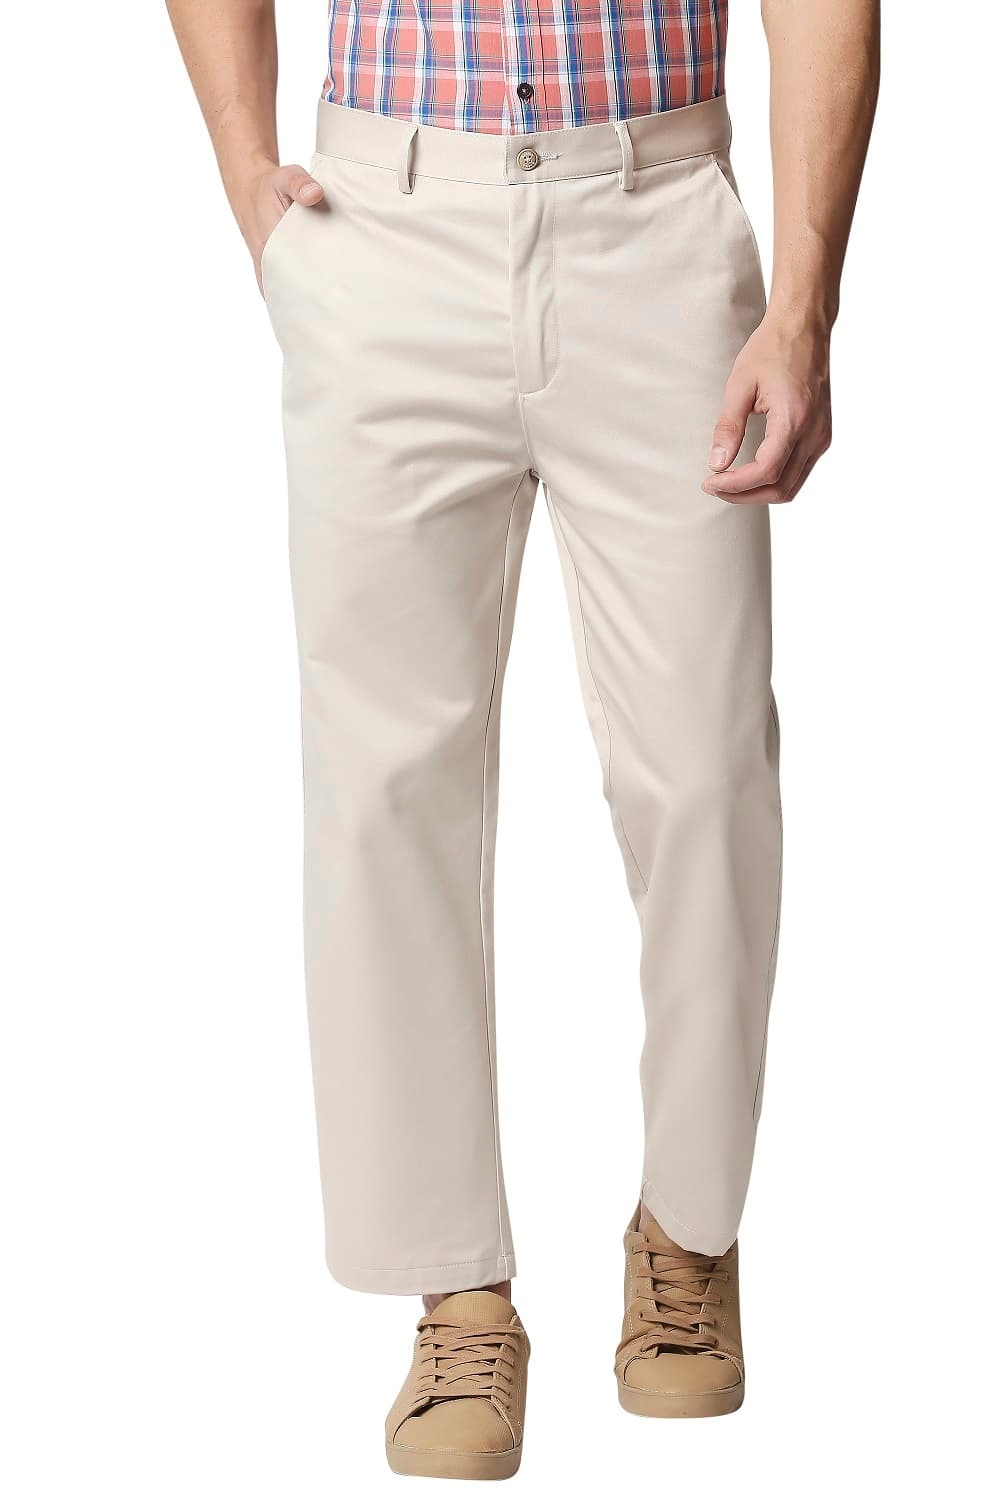 Basics | Basics Comfort Fit Ecru Satin Weave Poly Cotton Trousers